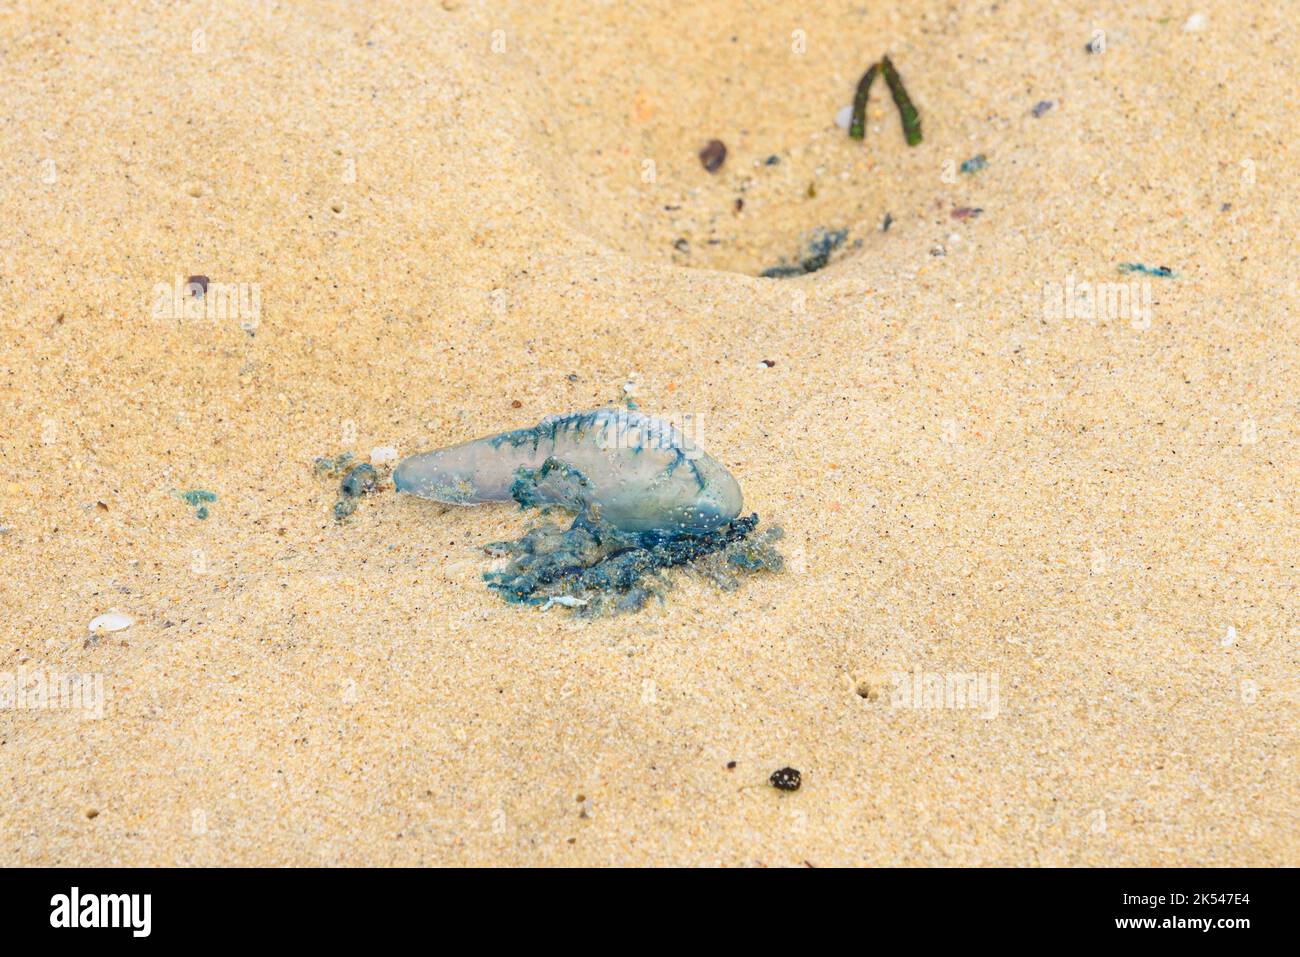 A washed up Portuguese Man o' War / blue bottle on the sand at Maroubra Beach, Sydney, Australia Stock Photo